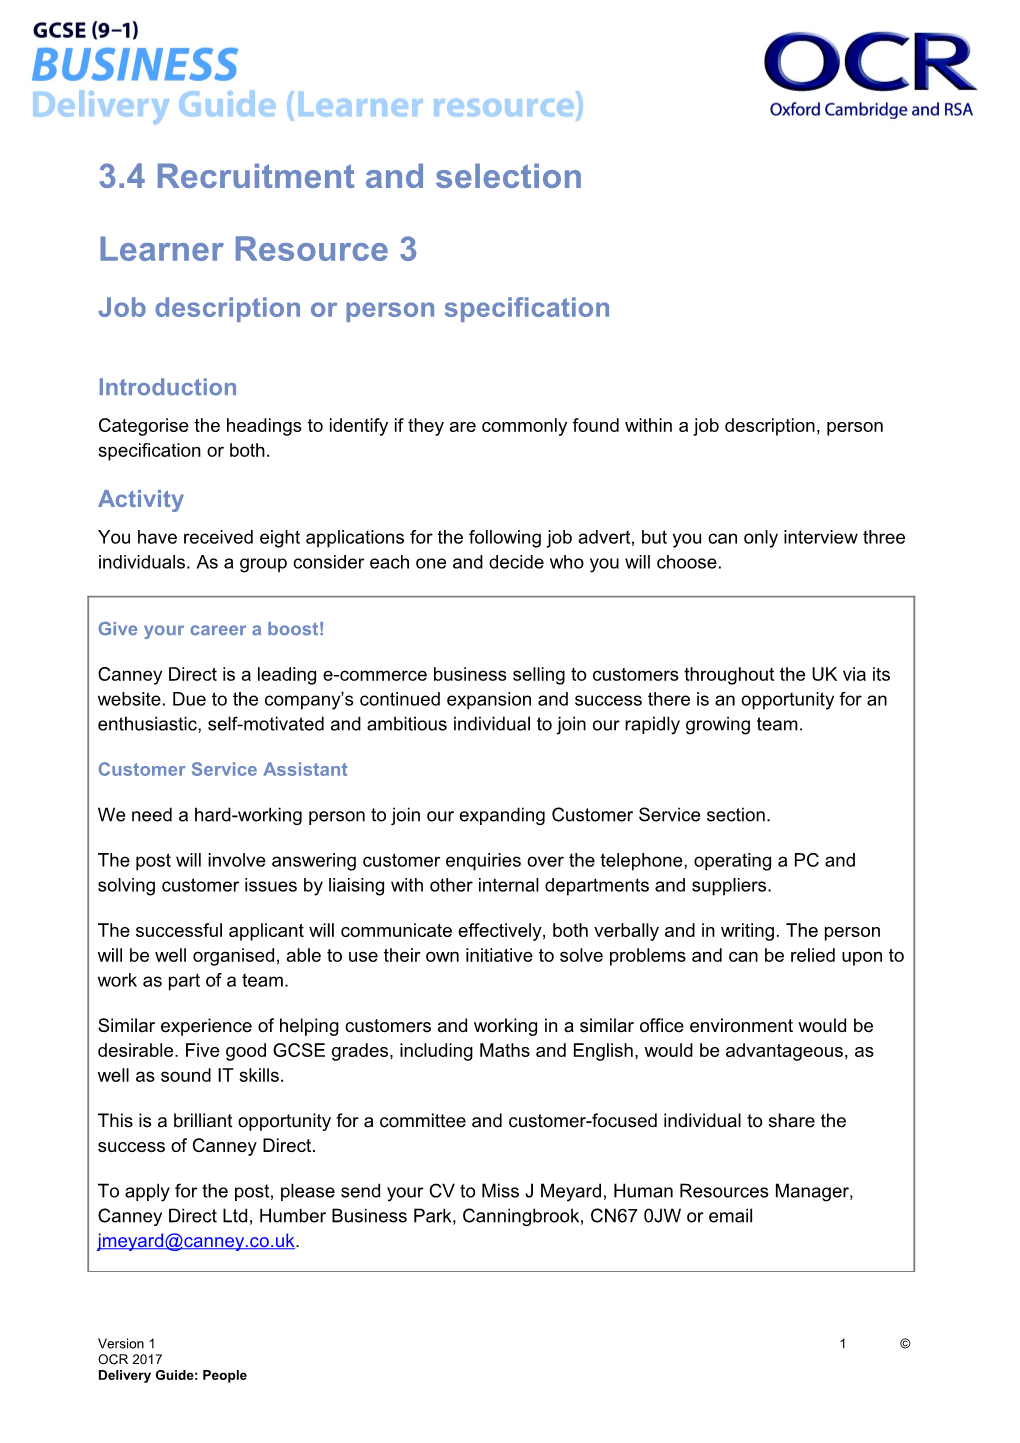 GCSE (9-1) Business Learner Resource